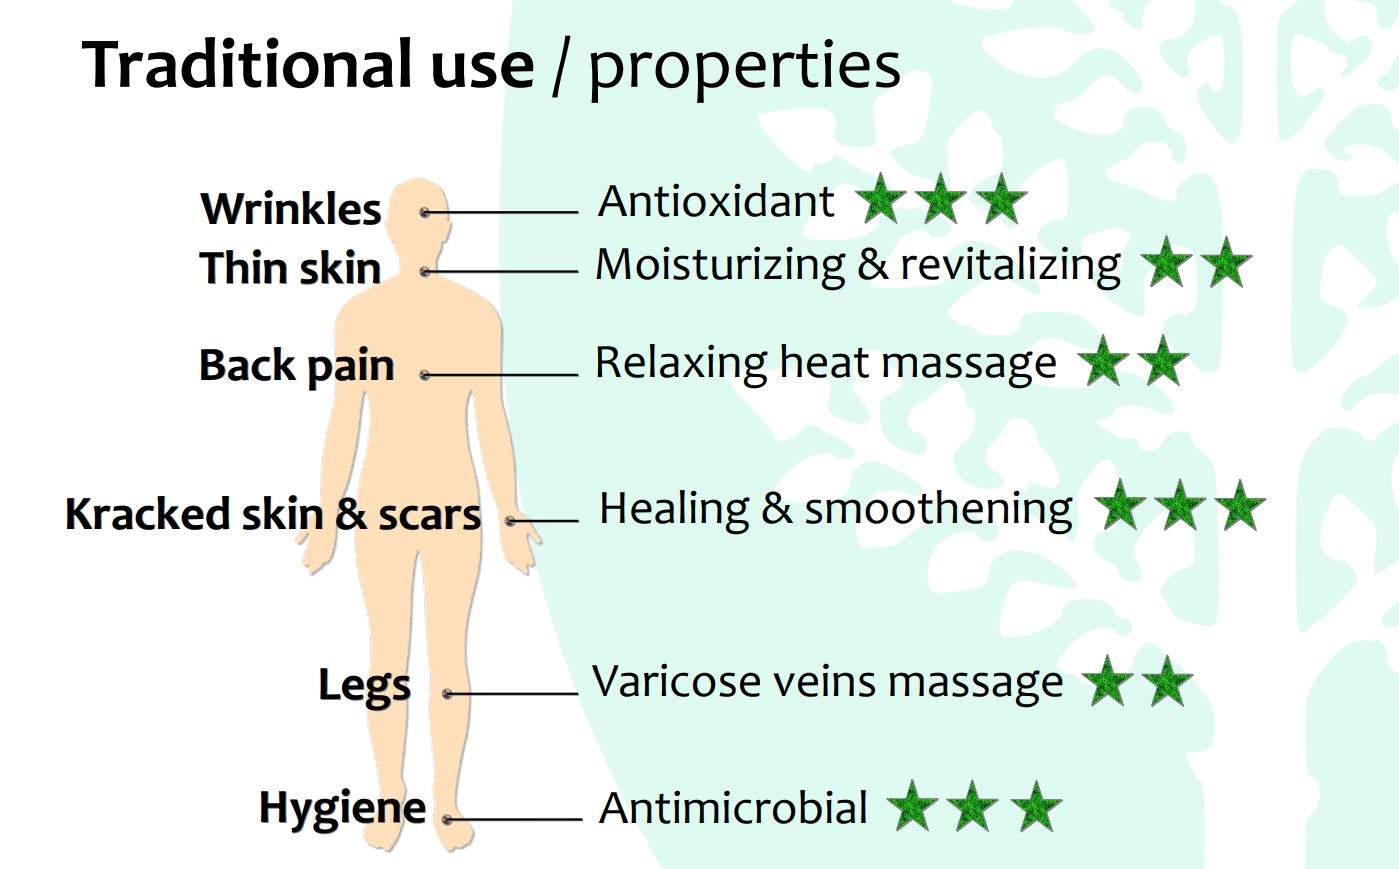 Lenticus properties oil moisturizing healing